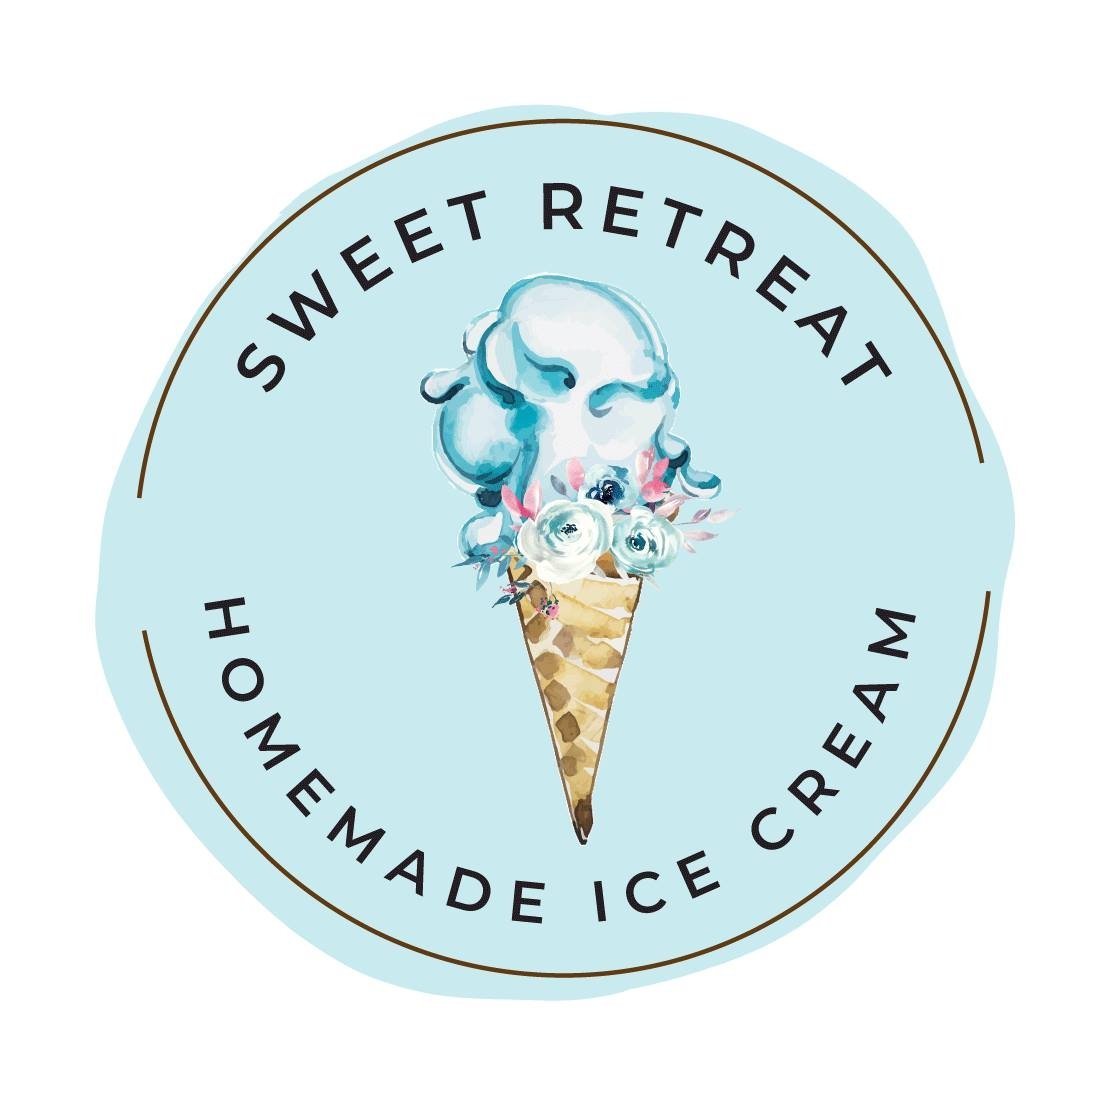 Sweet Retreat Homemade Ice Cream and More Web 2.0 Di image